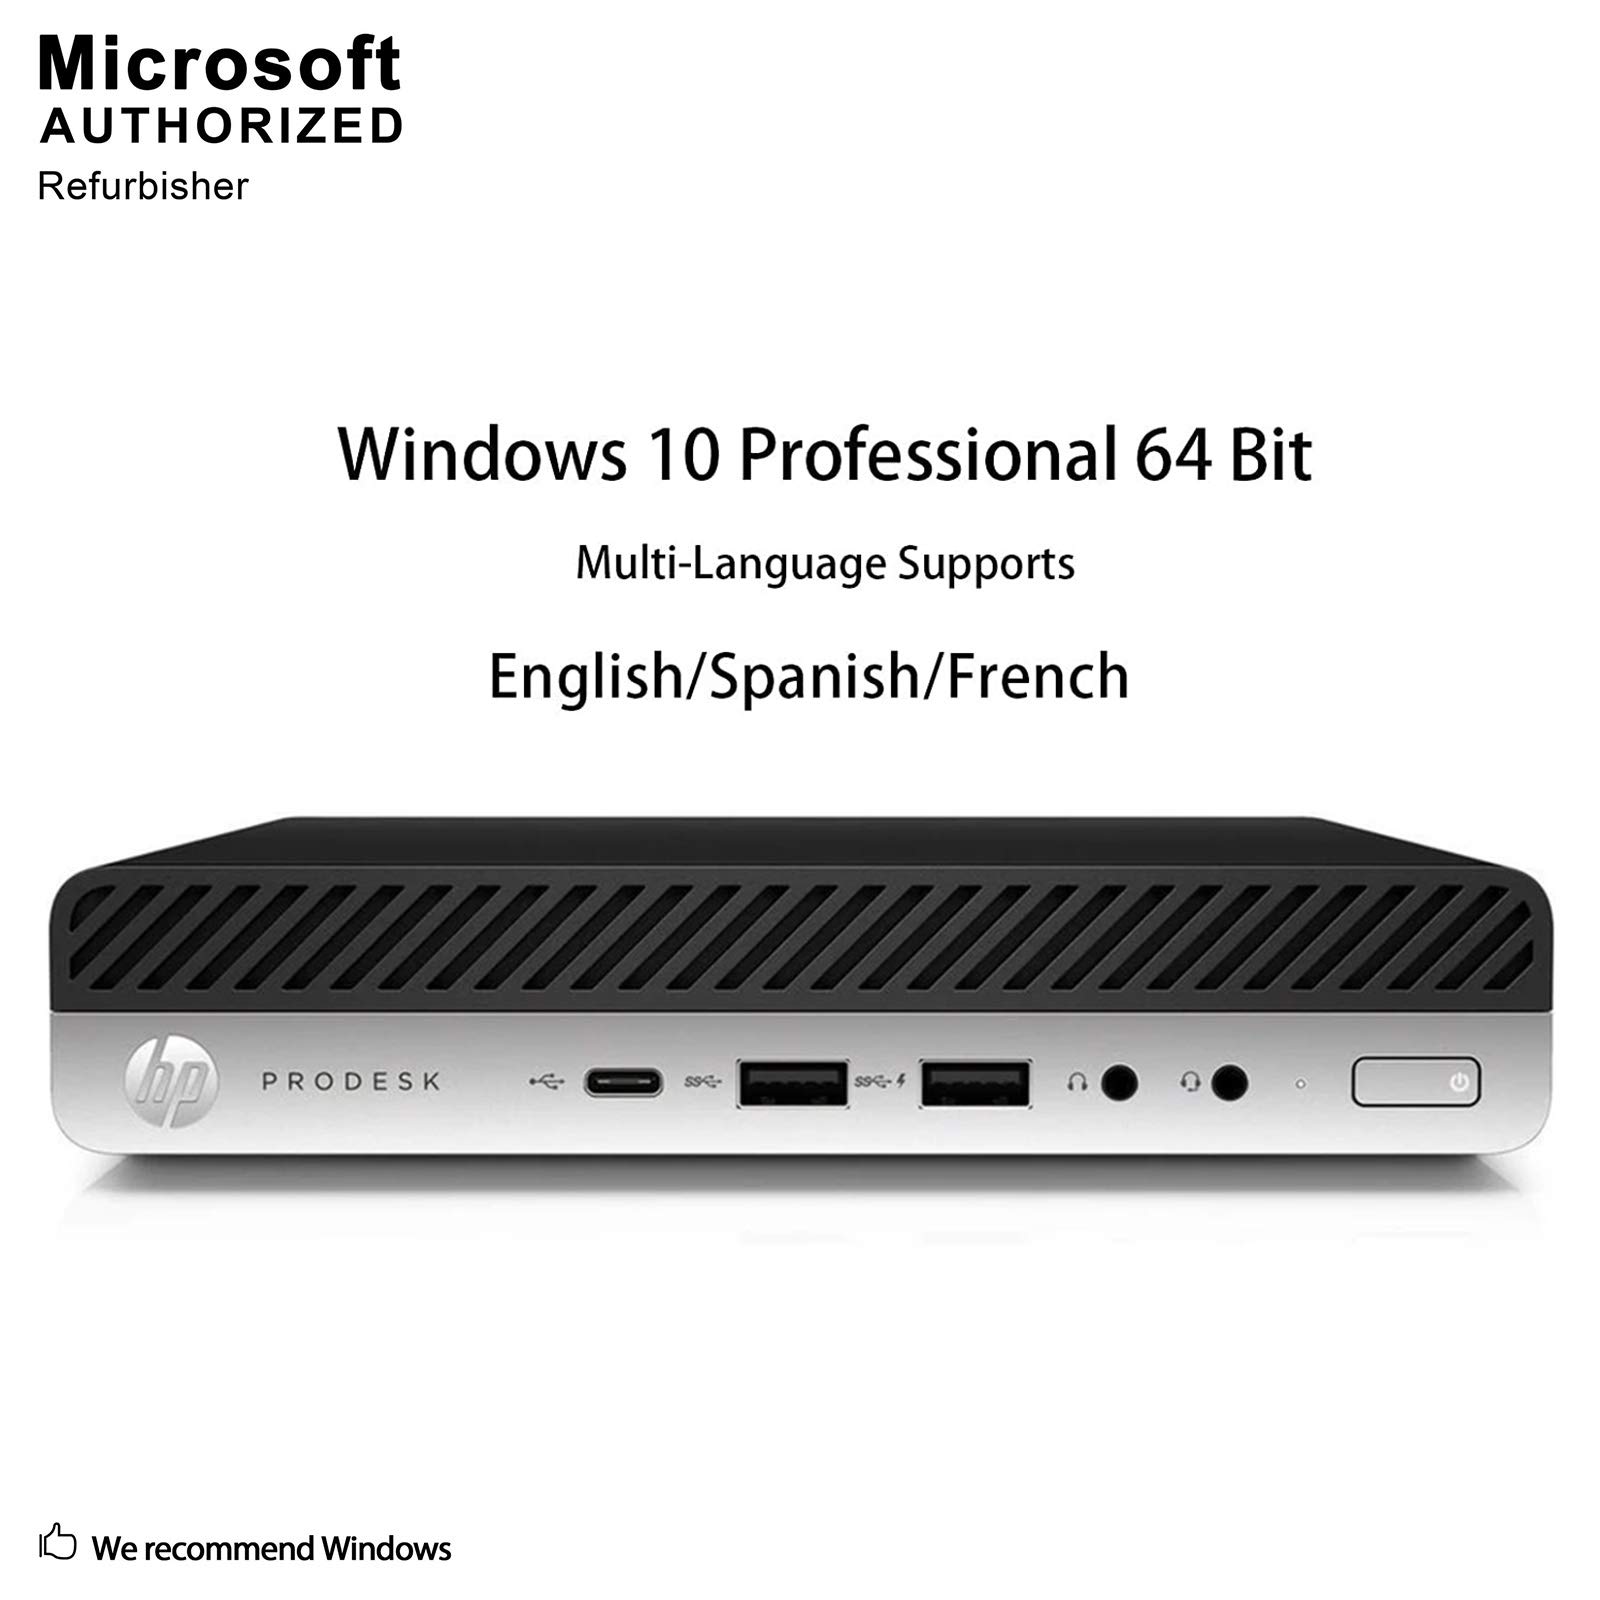 HP ProDesk 600 G3 Desktop Mini, Intel Quad Core i5-7500T 2.7GHz, 8GB DDR4, 1TB, WiFi, BT, DP, Windows 10 Pro 64 Bit - Multi-Language Support English/Spanish/French